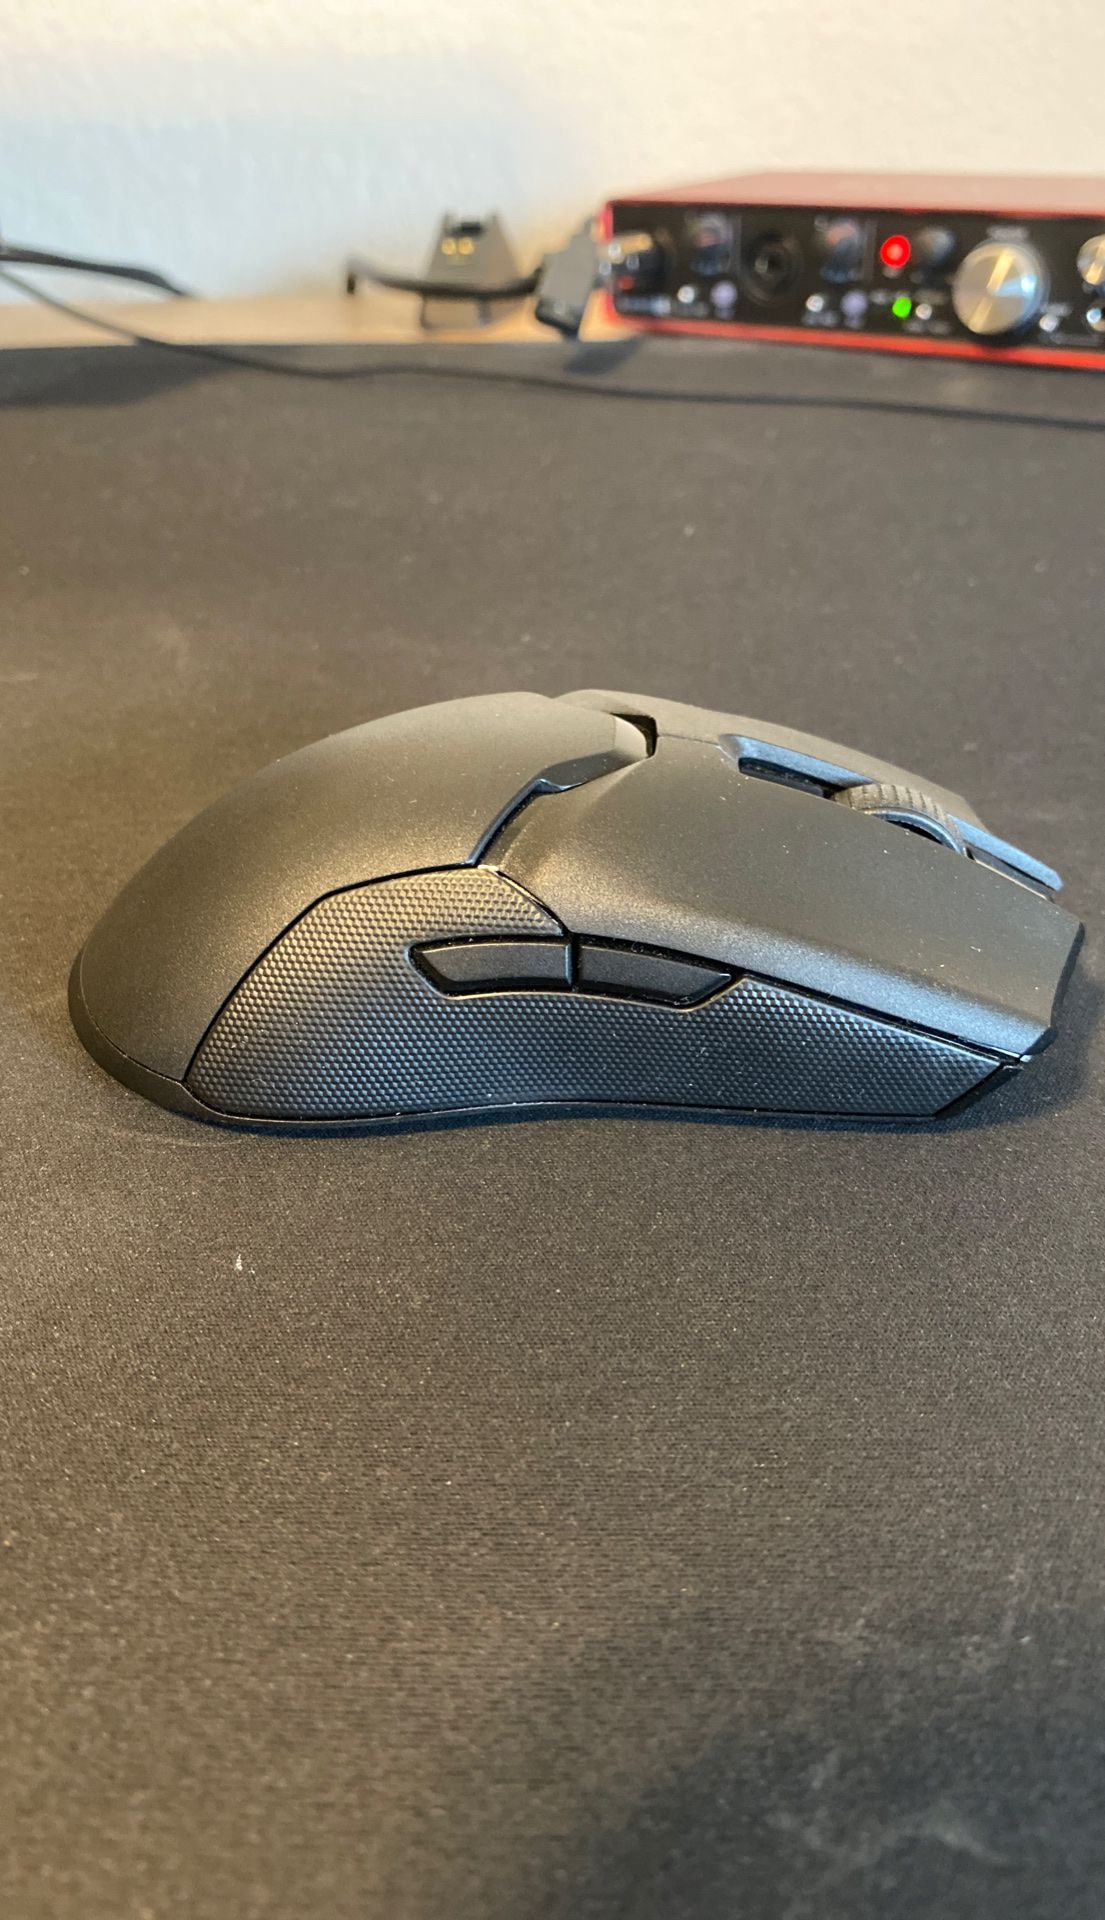 Razor Viper Ultimate Gaming Mouse